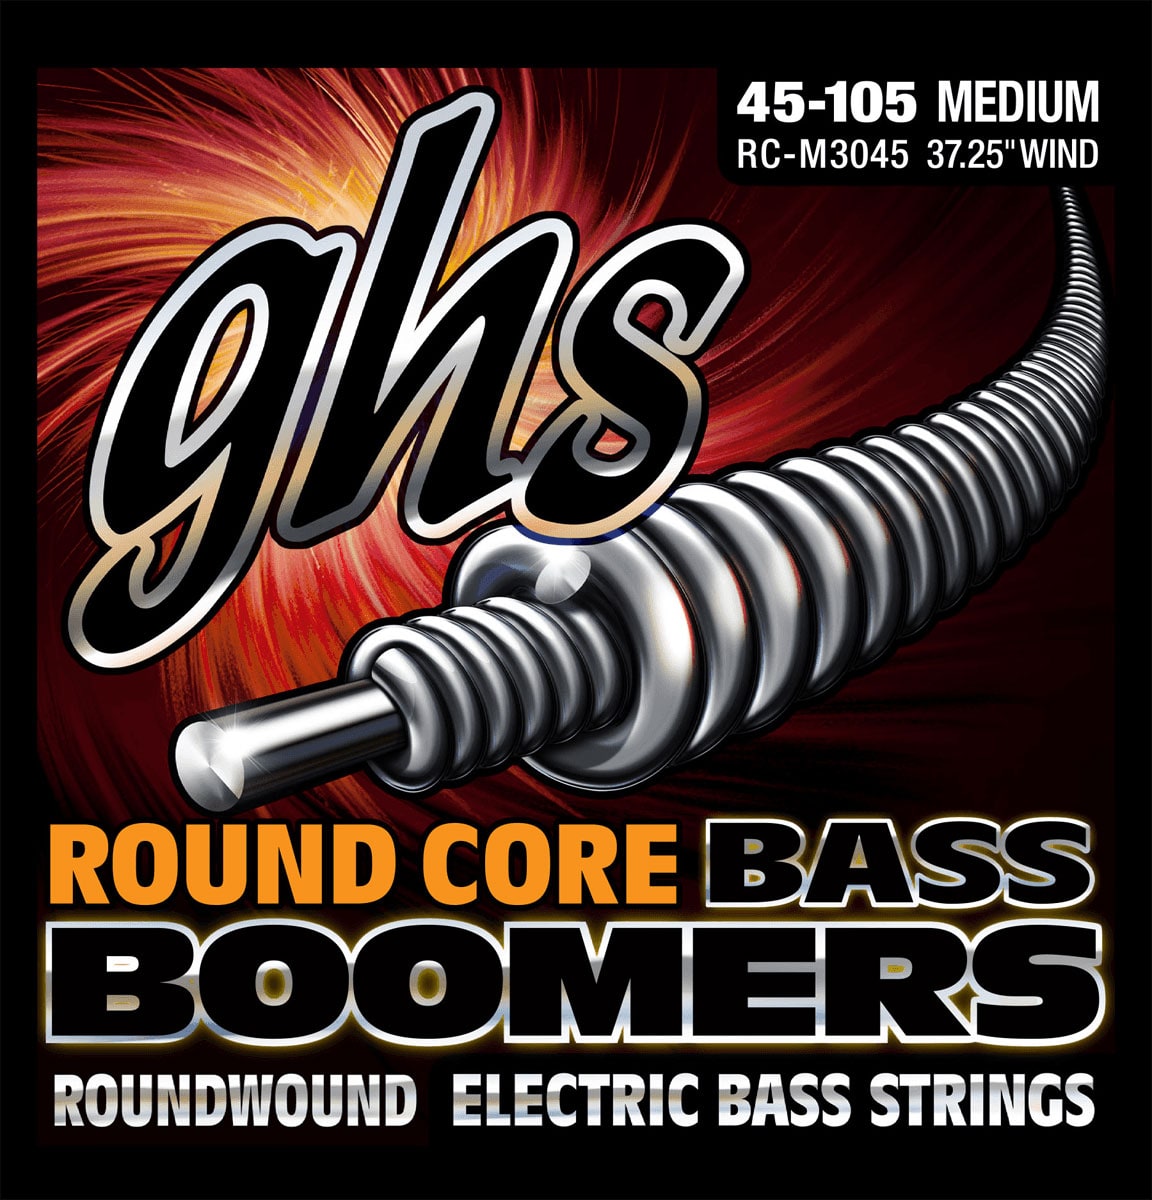 GHS RC-M3045 ROUND CORE BASS BOOMERS MEDIUM 45-105